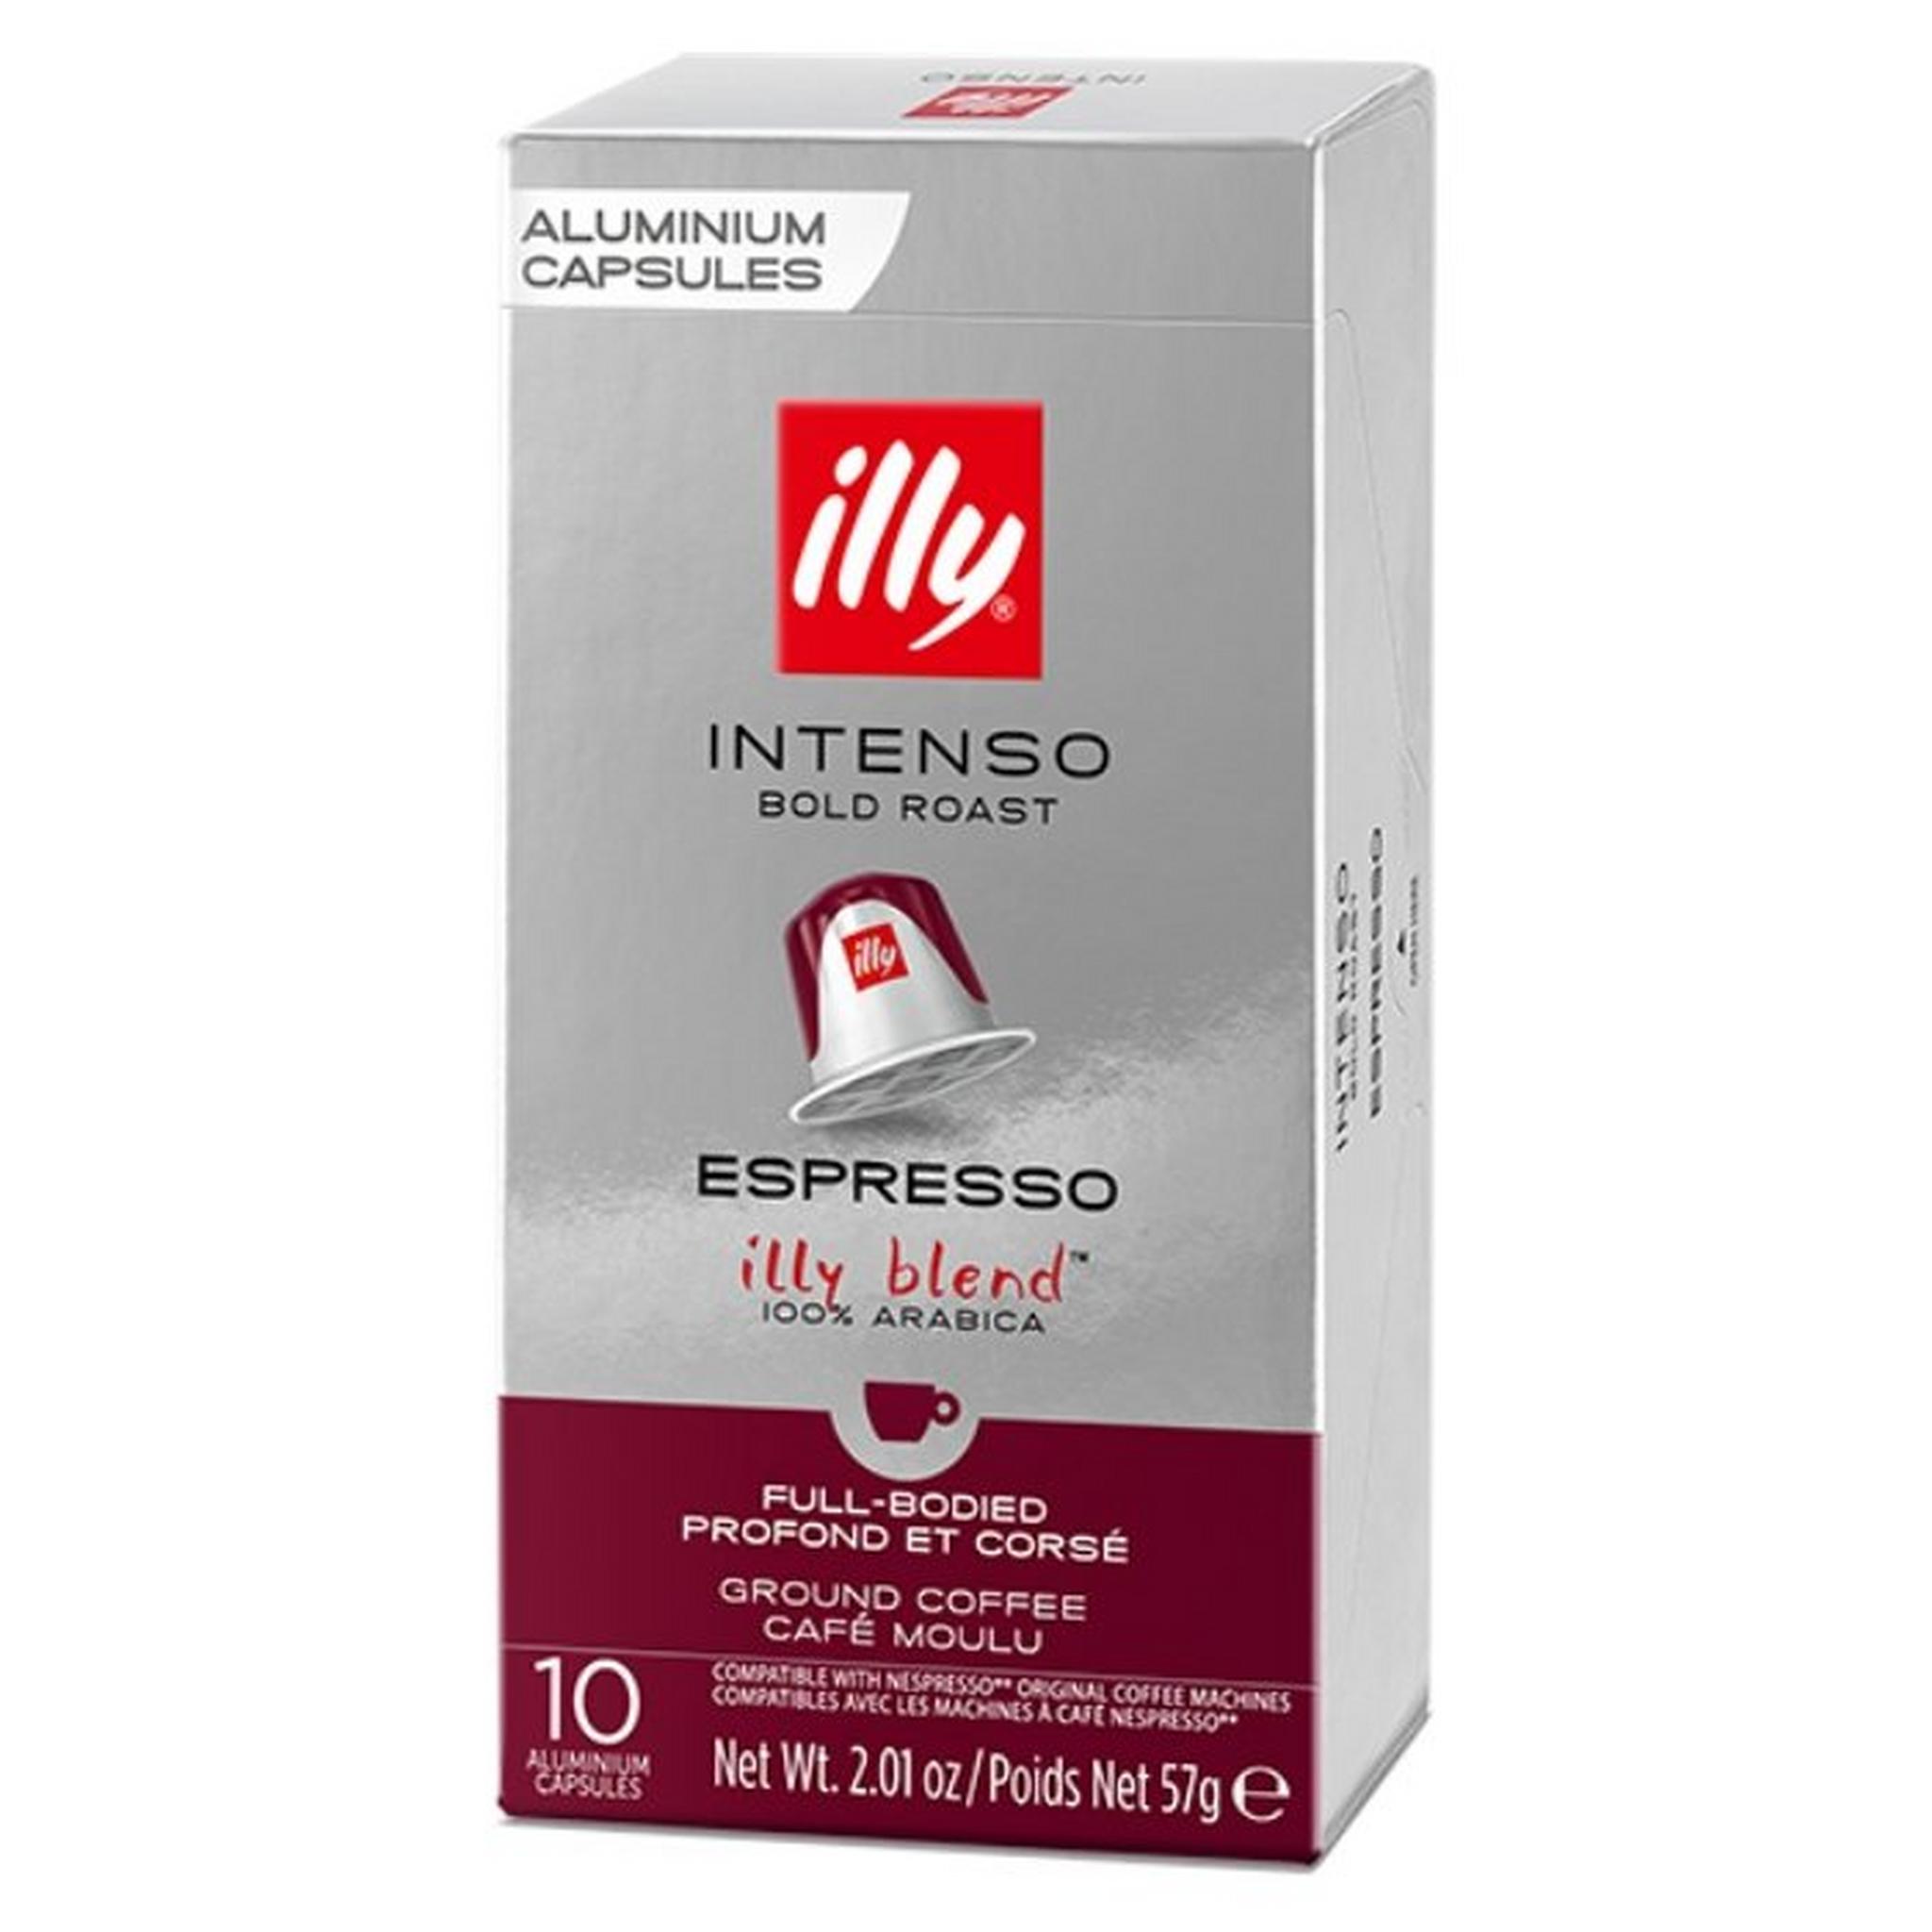 Illy Intenso Espresso 10 Capsules 57 Gram